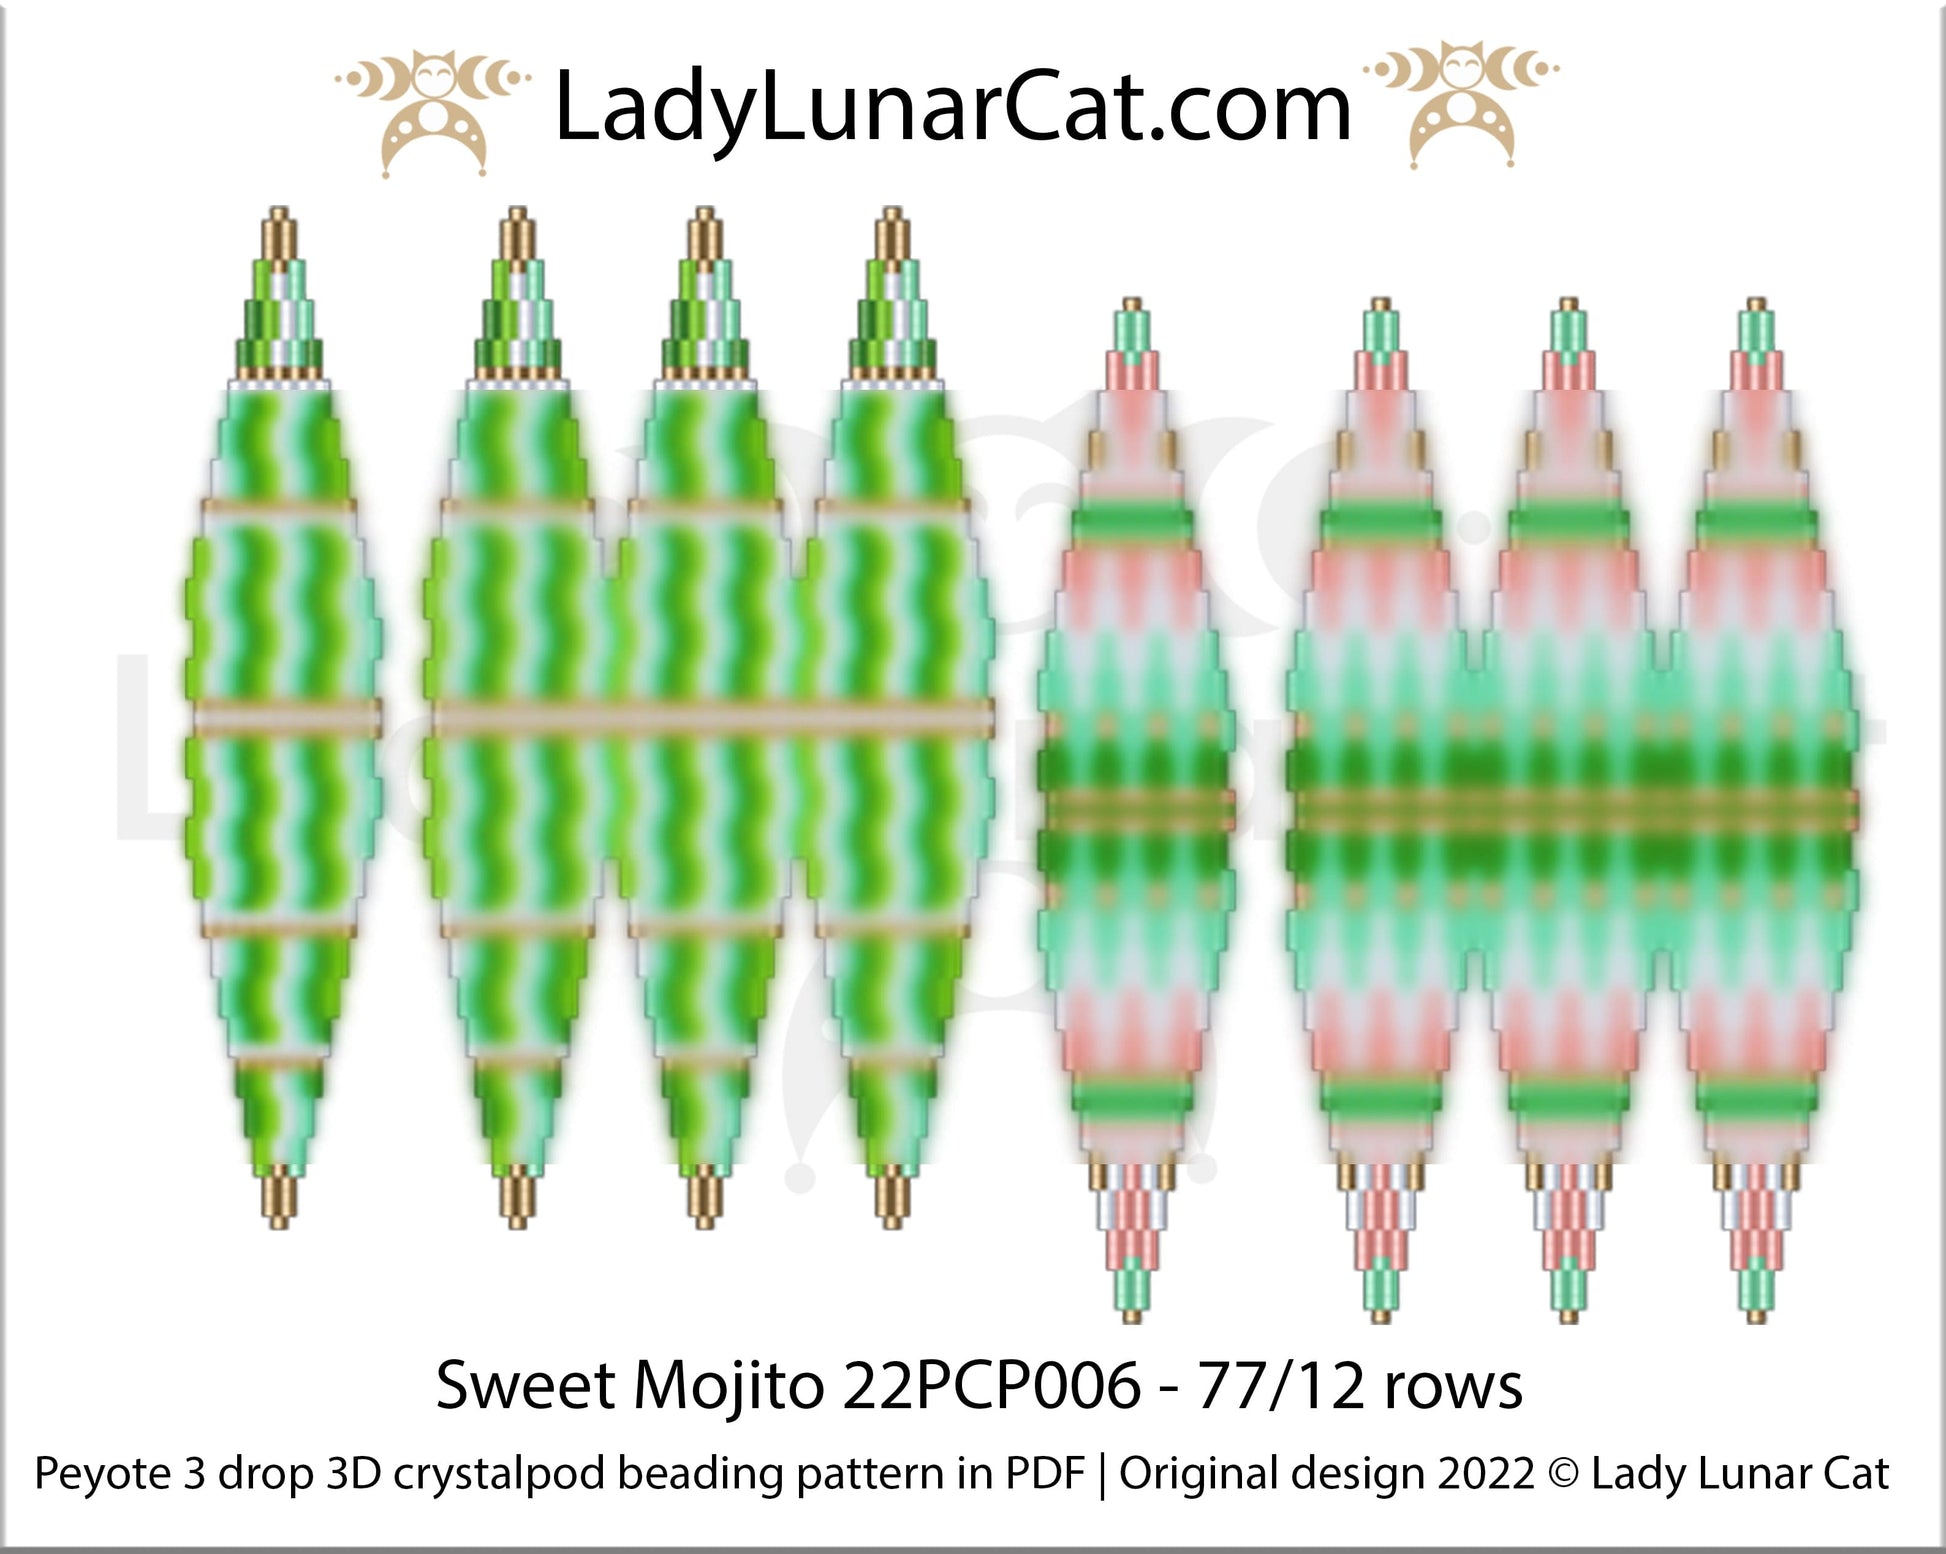 Peyote 3drop pod pattern or crystalpod pattern for beading  Sweet Mojito 22PCP006 - 77/12 rows LadyLunarCat